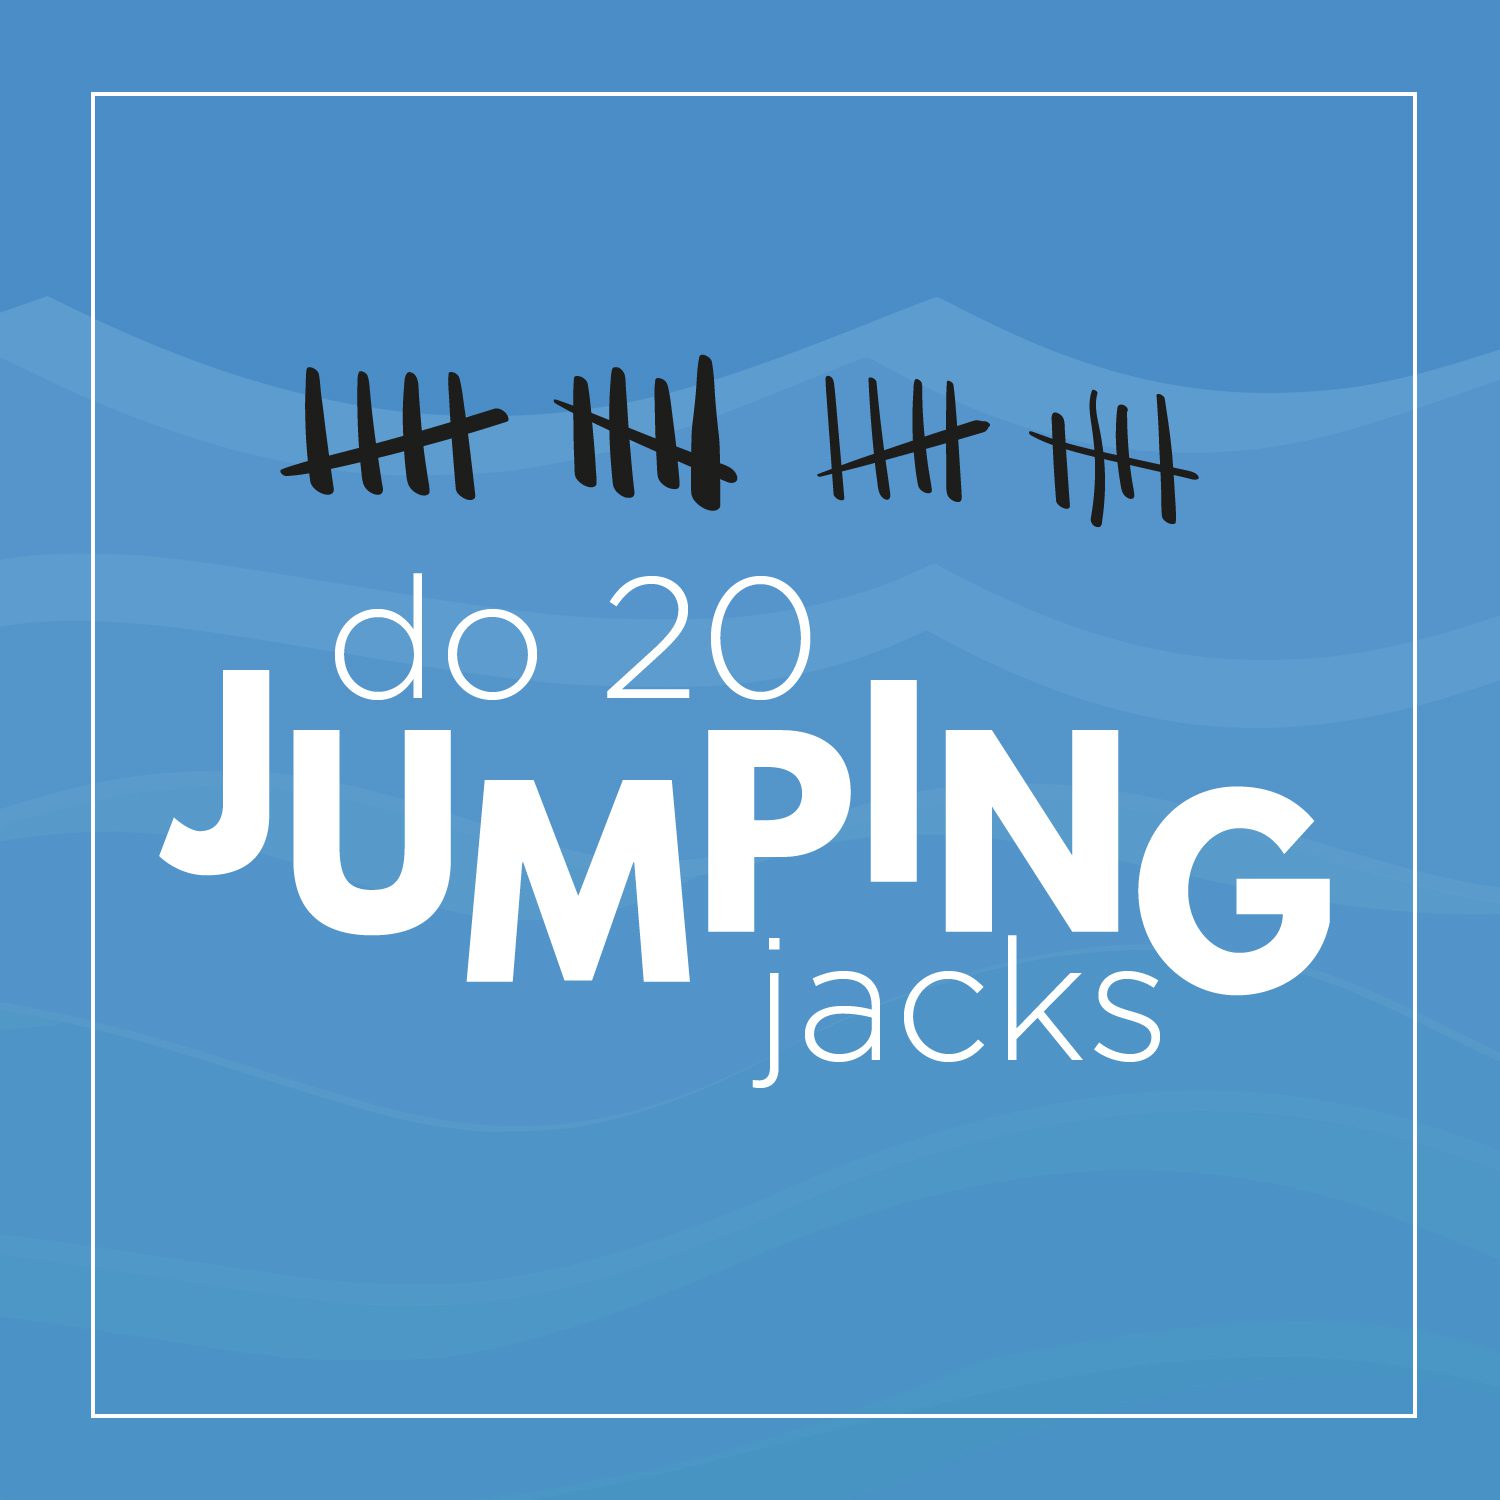 Do 20 jumping jacks